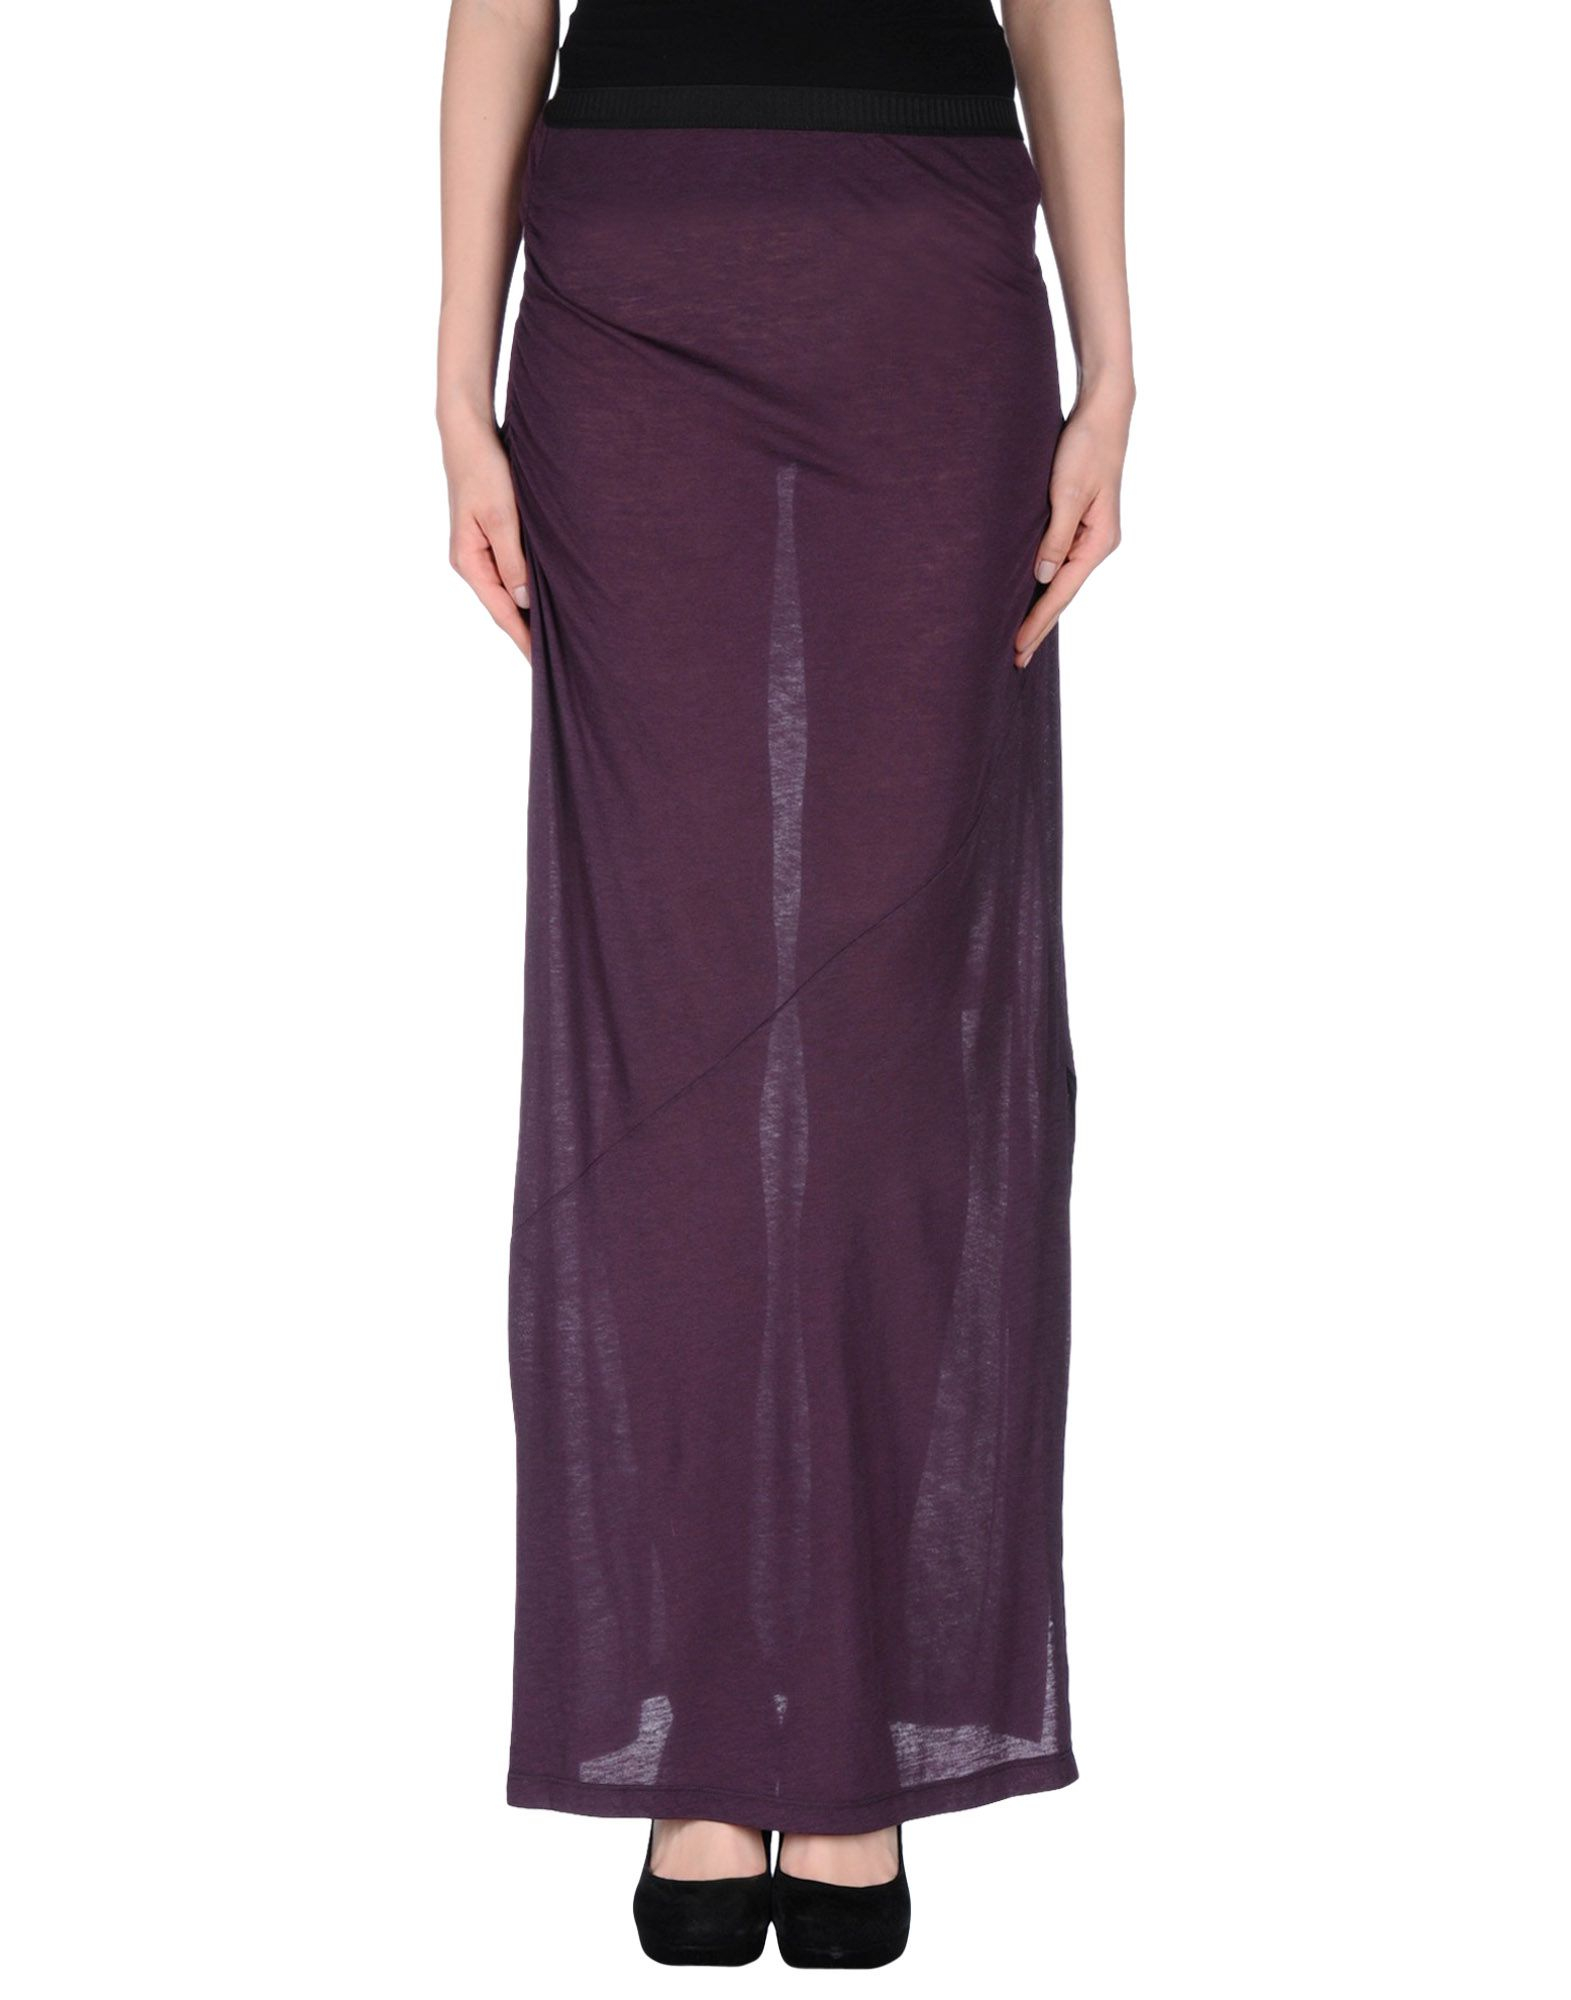 Pinko Long Skirt in Purple (Deep purple) - Save 77% | Lyst